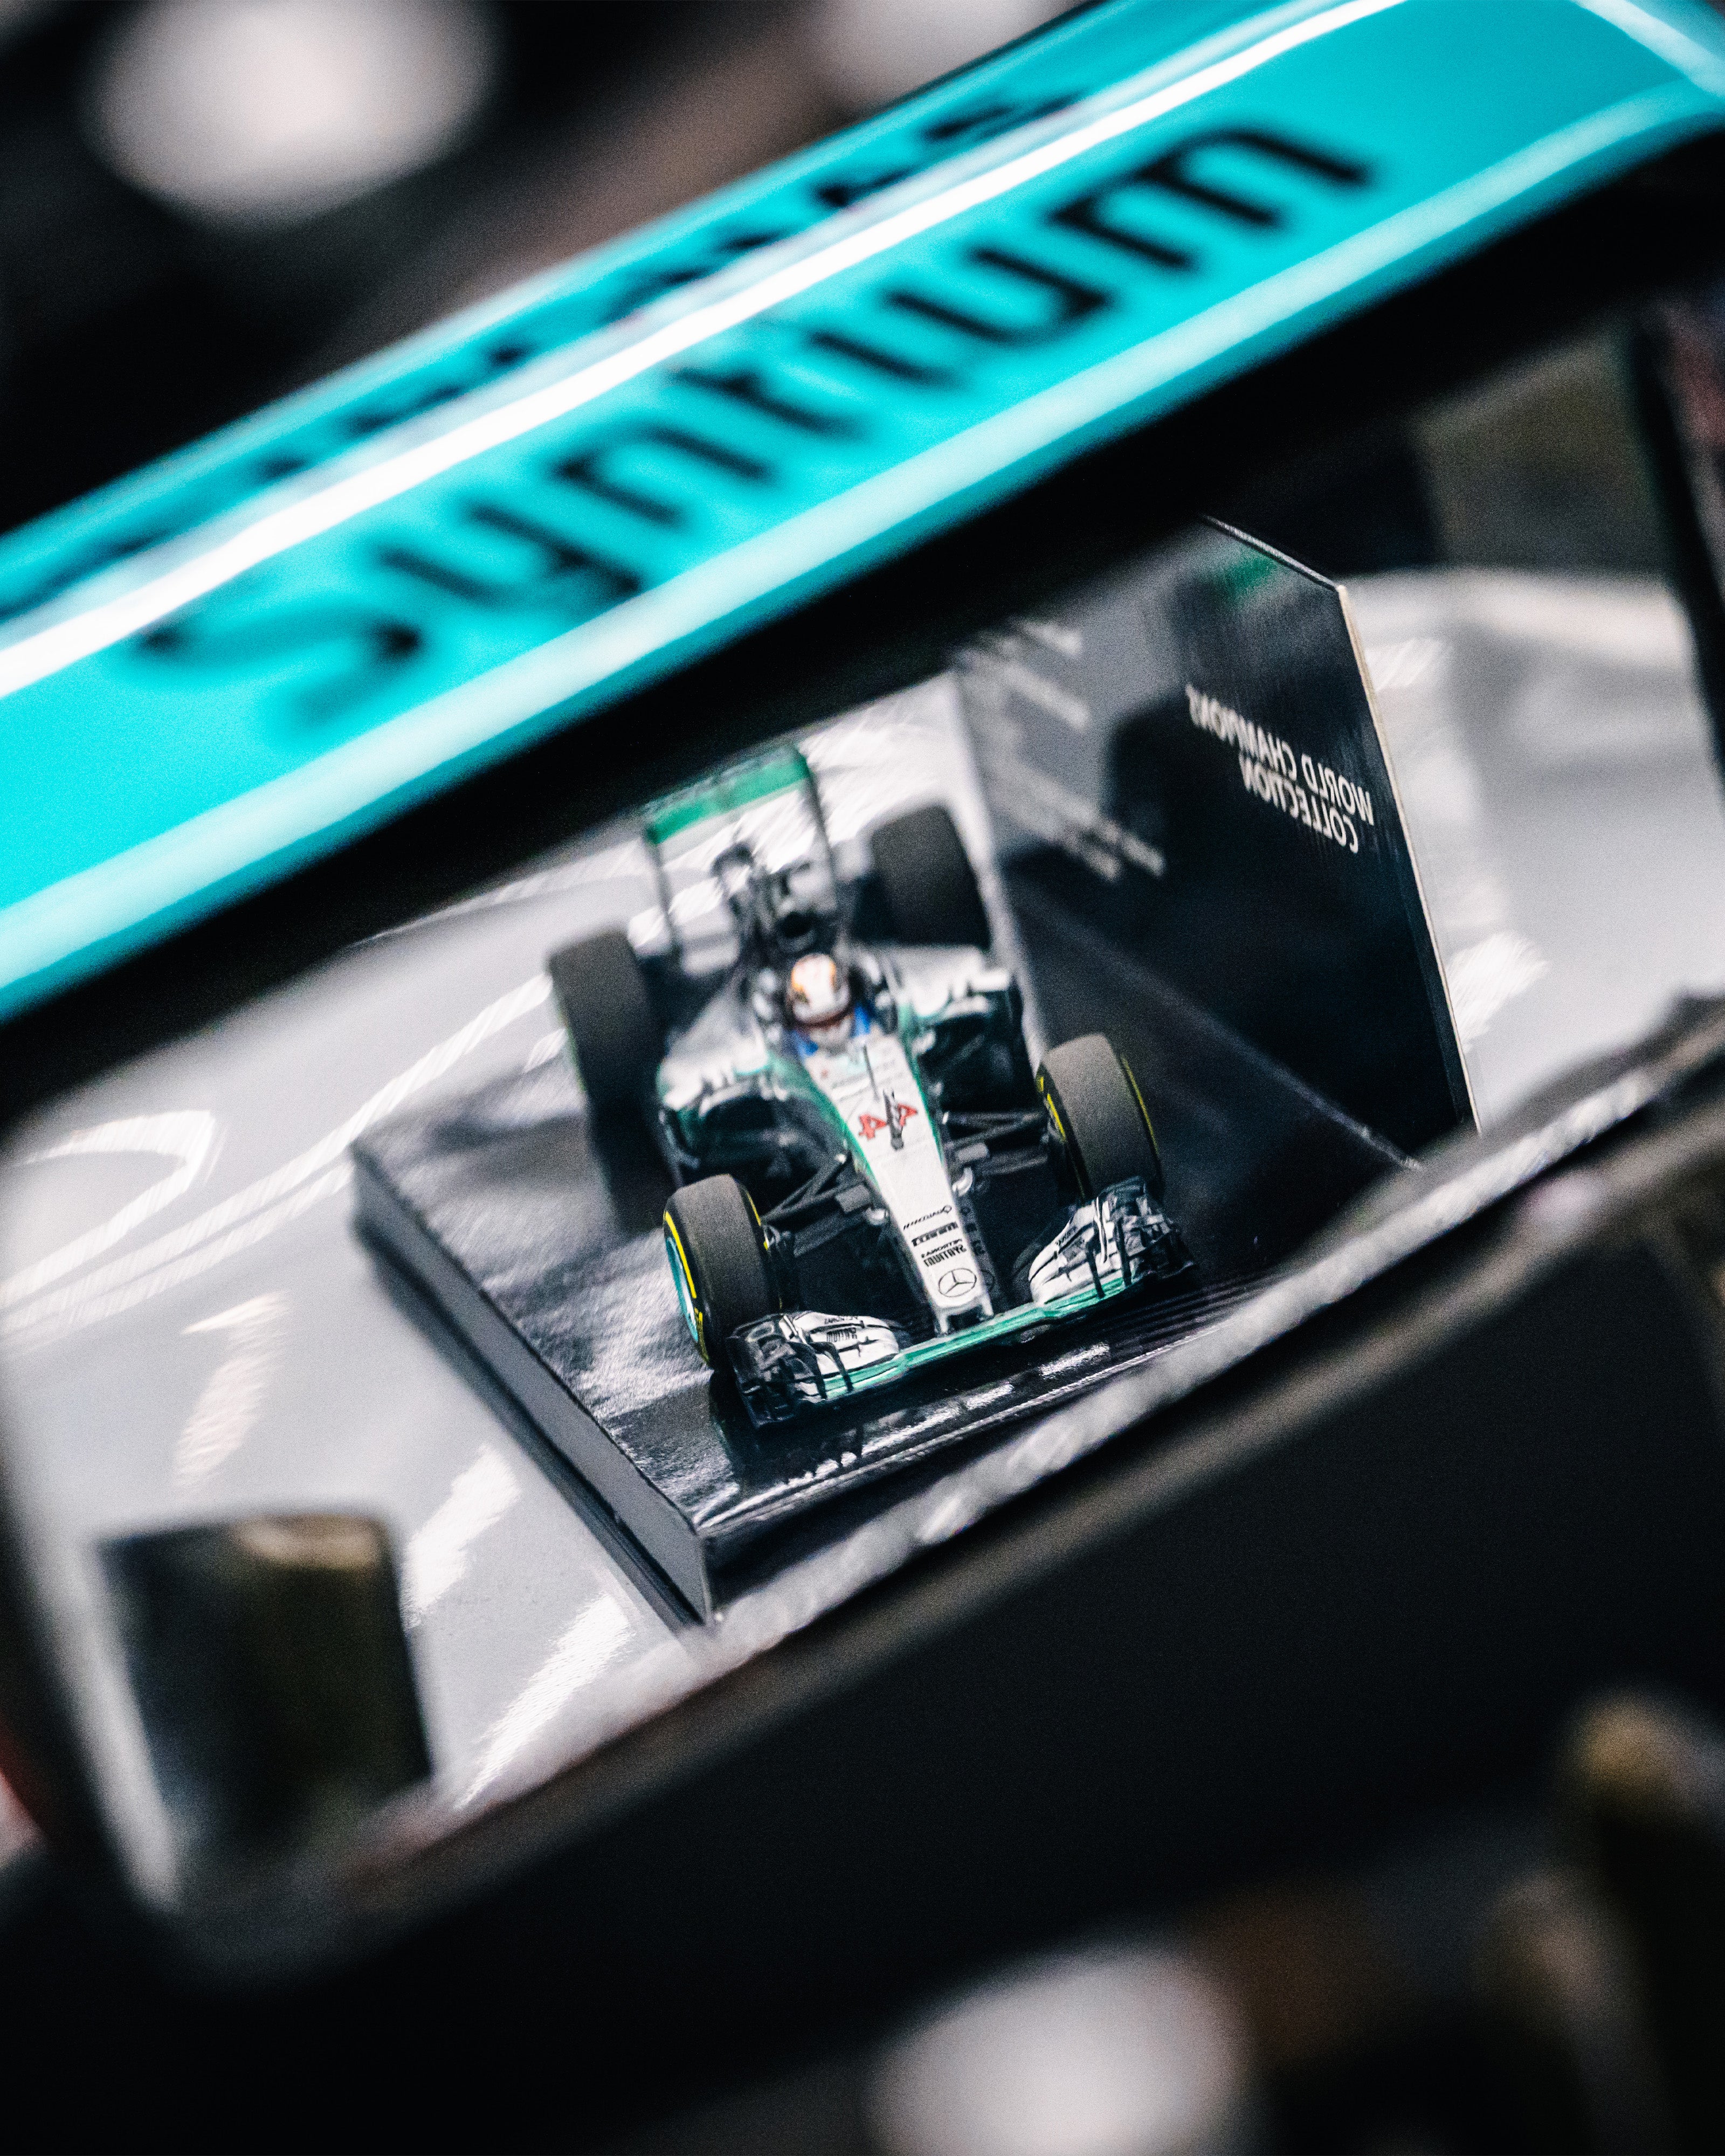 W06 - 2015 Formula One World Champion - #44 L. Hamilton 1:43